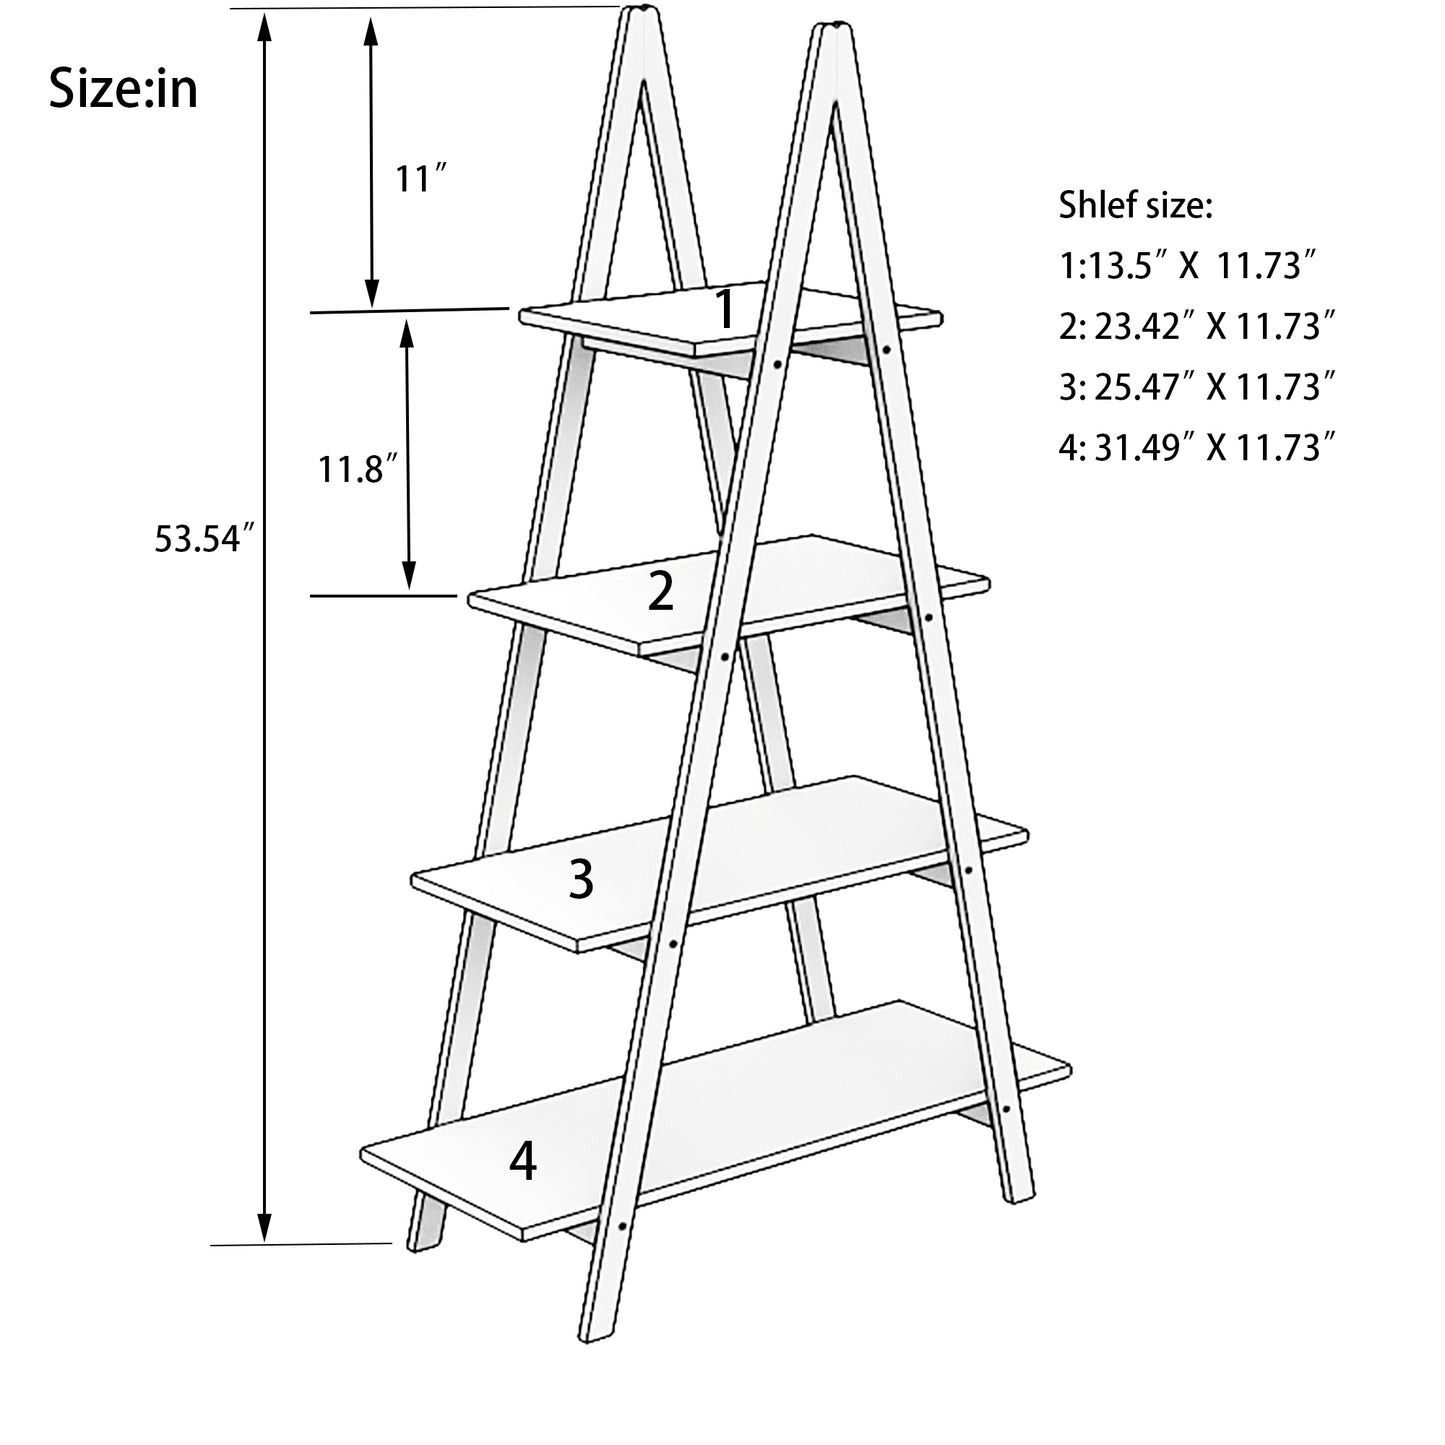 Solid bamboo wood oxford “A”frame ladder display bookshelf